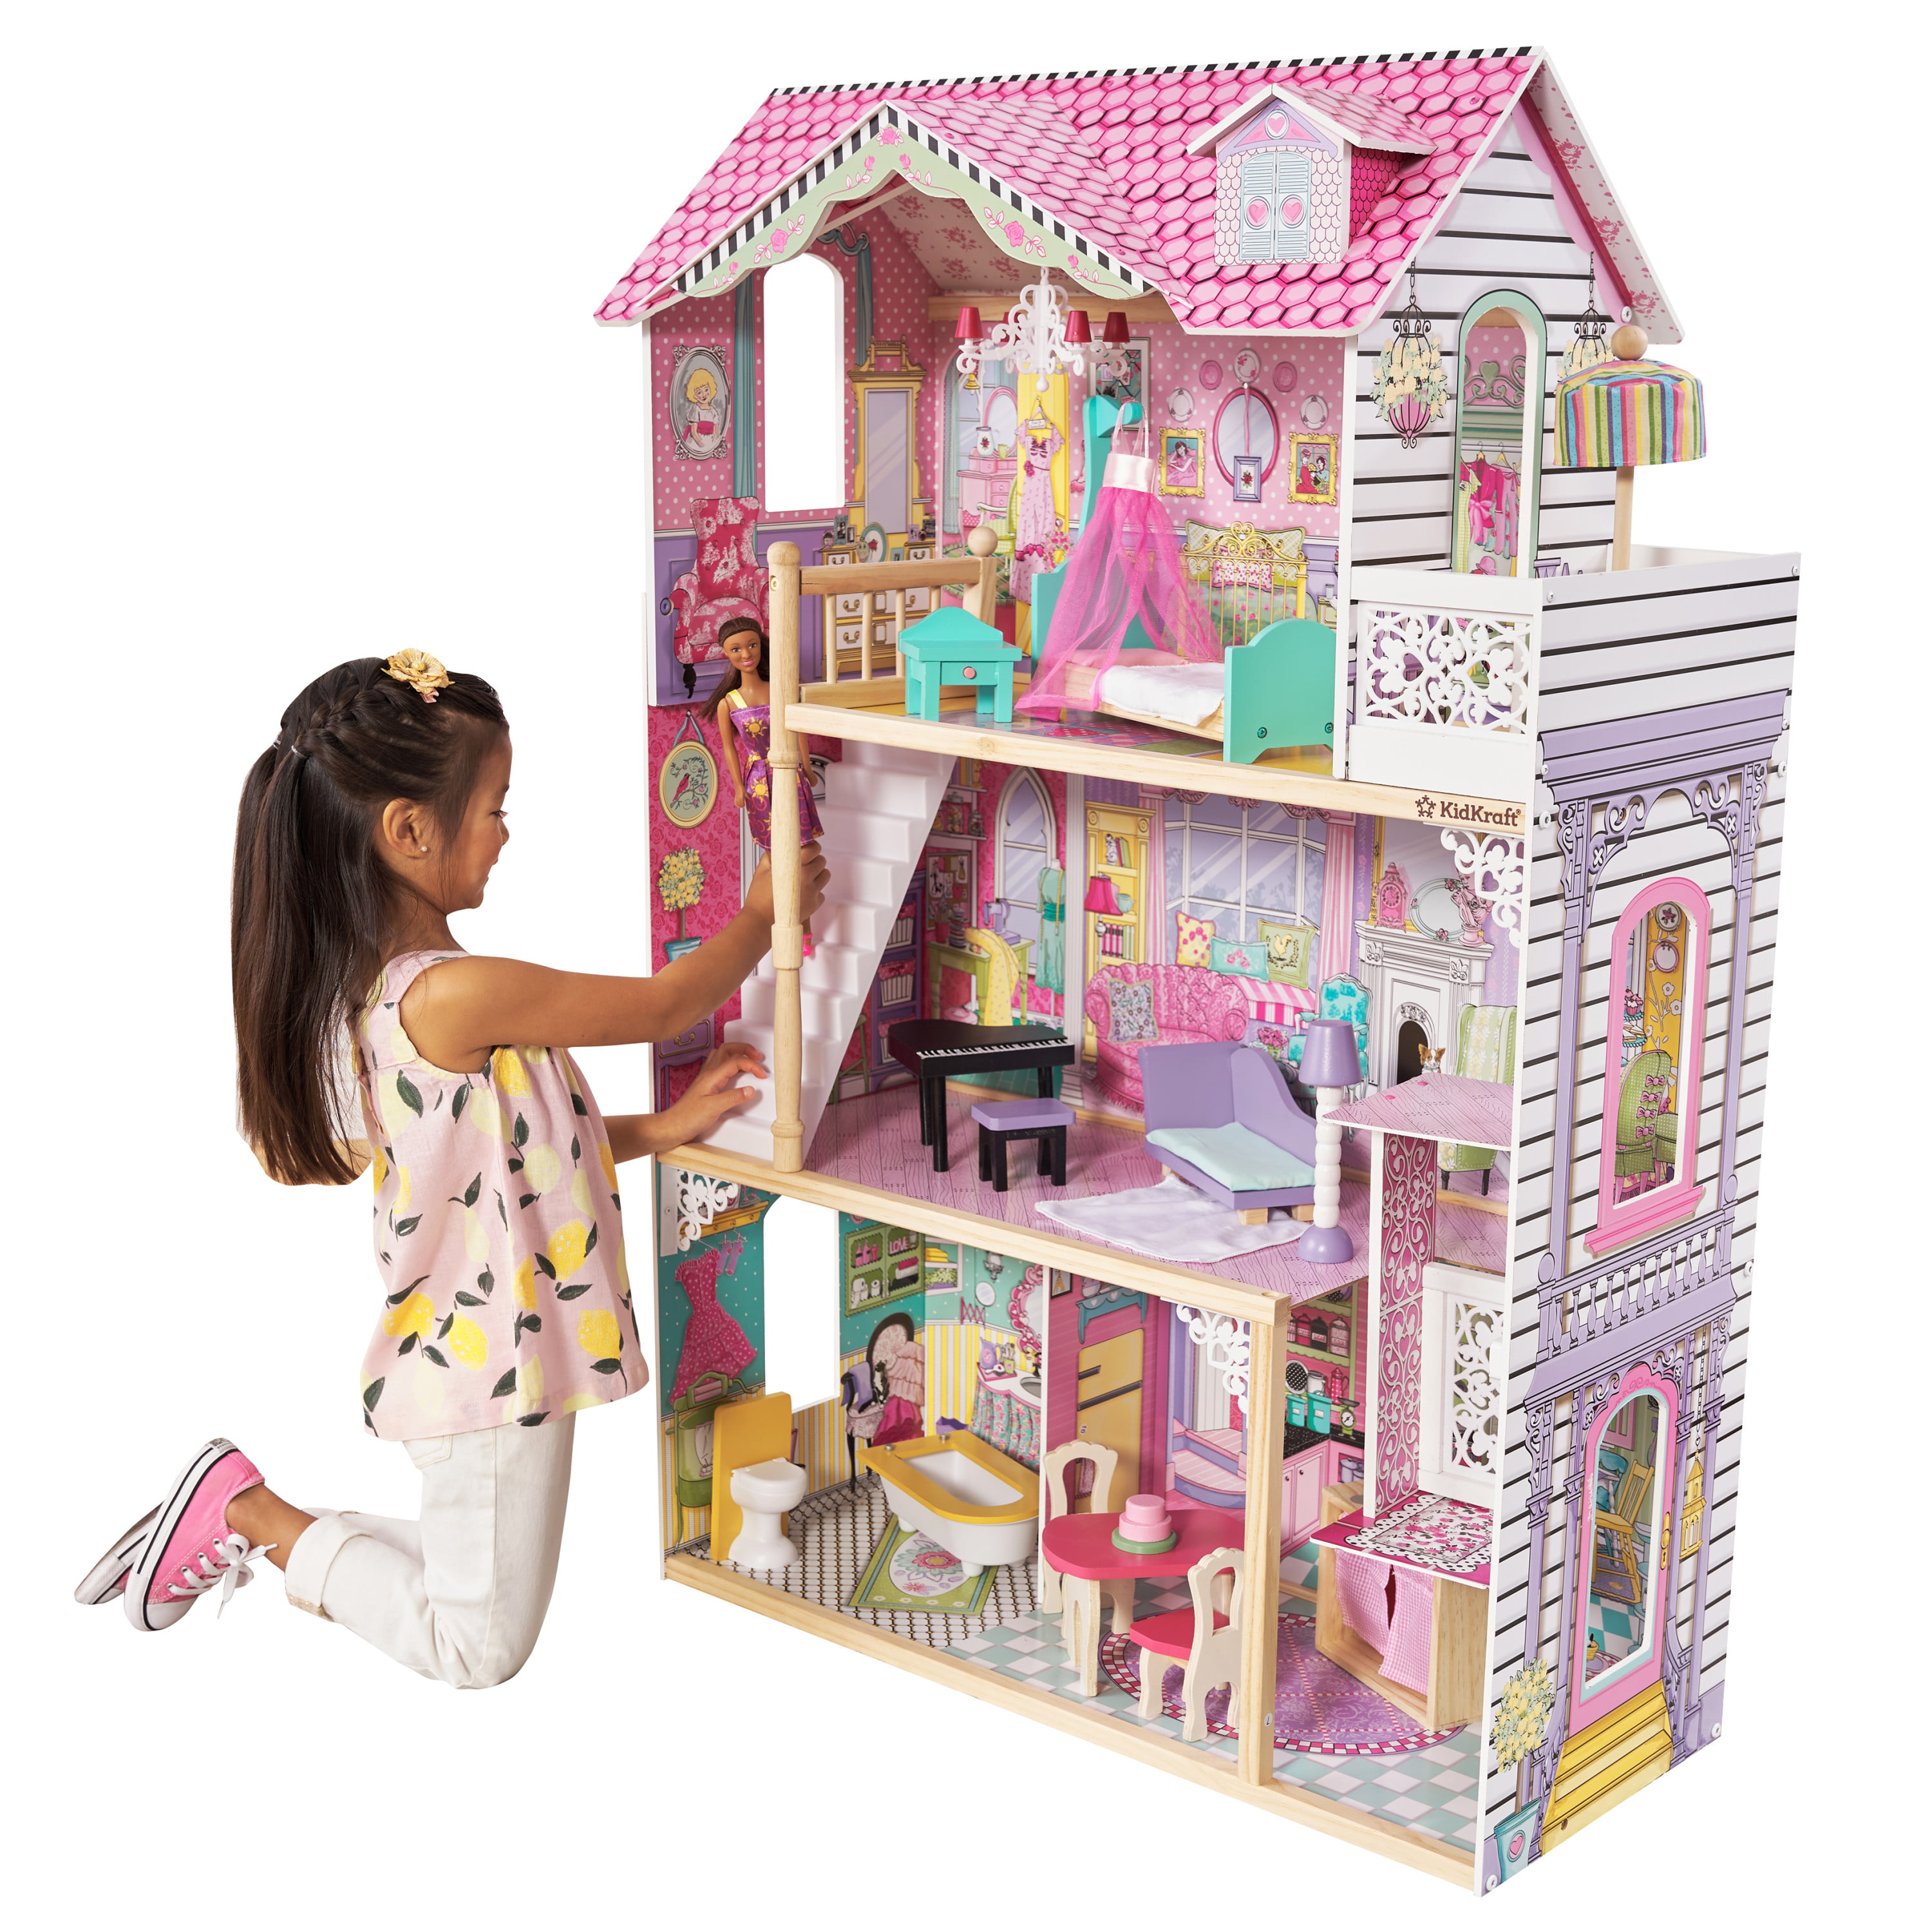 Kidkraft So Chic Dollhouse Wooden Dollhouse for Barbie Sized Dolls 